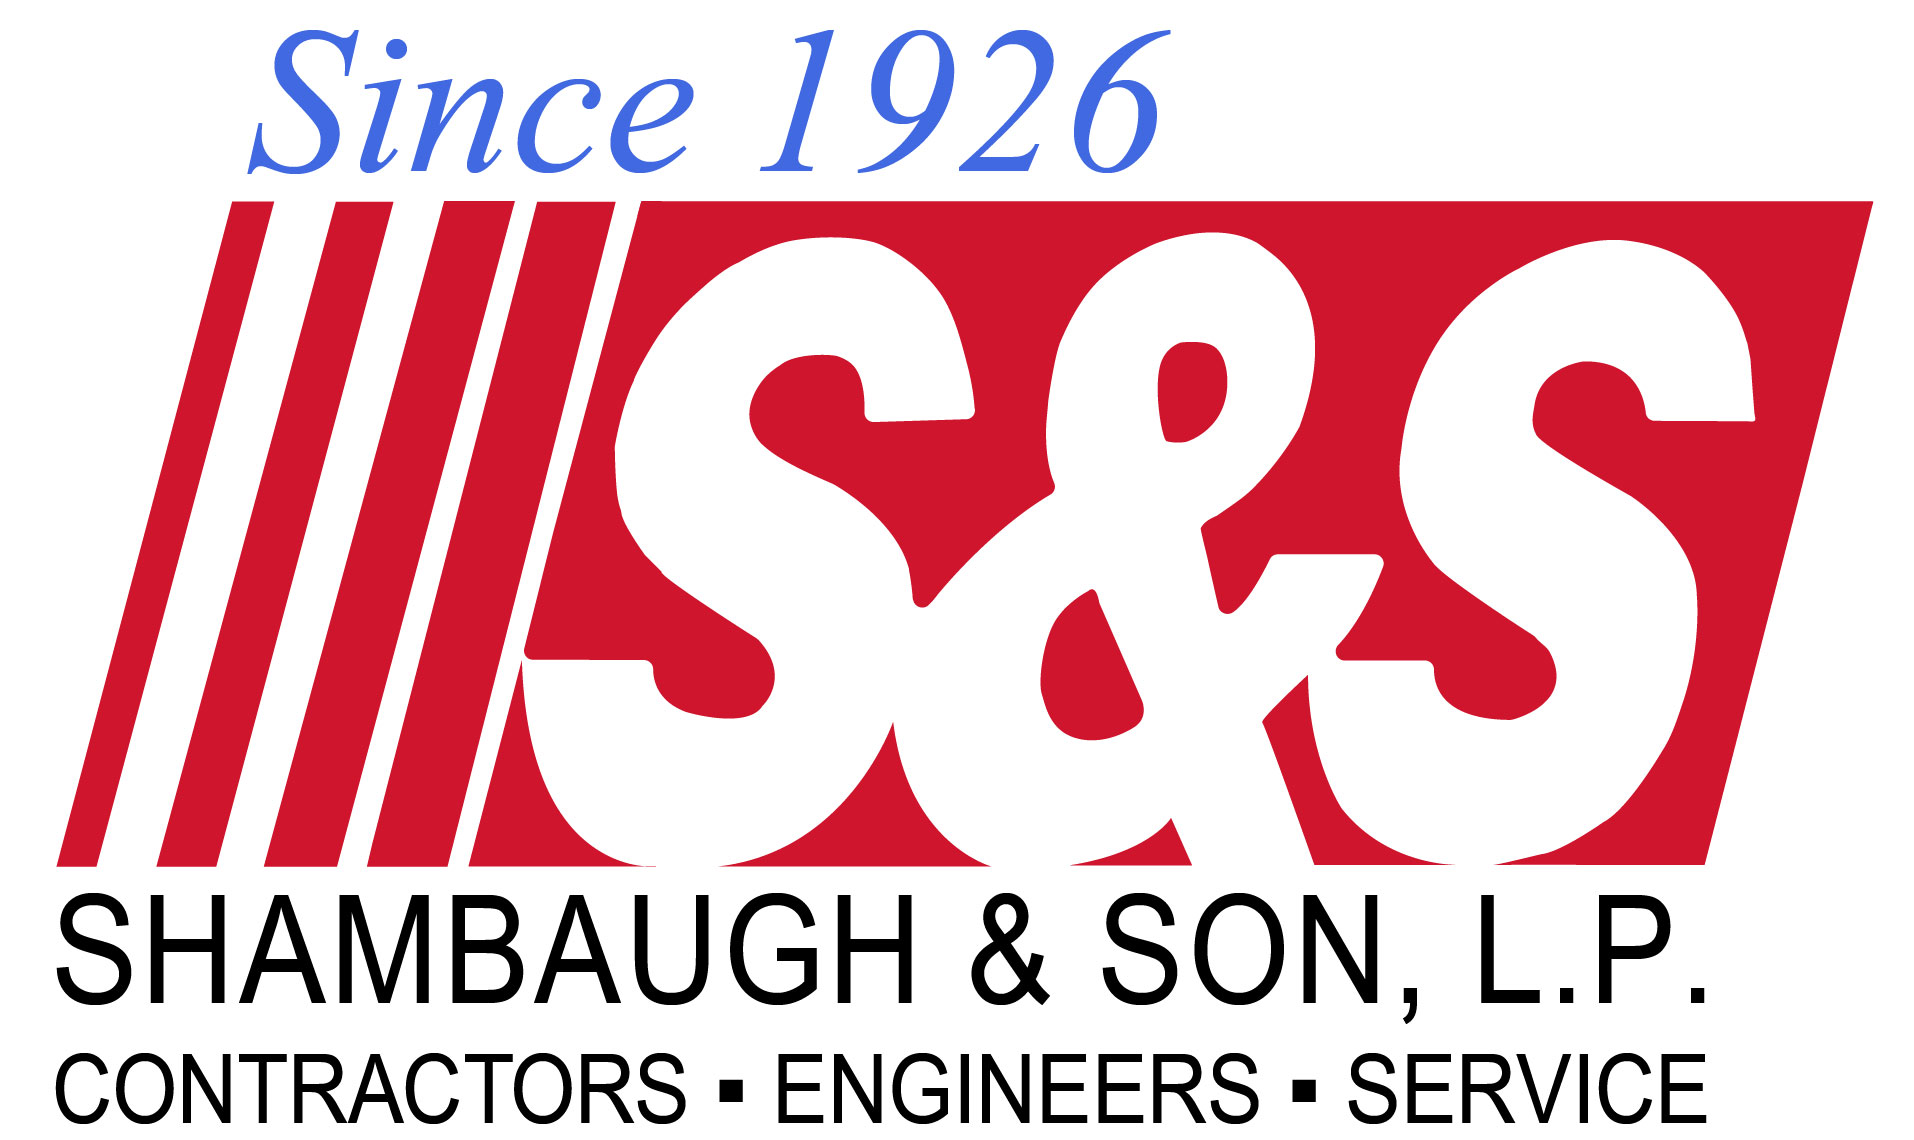 Shambaugh & Sons, L.P. Contractors, Enhineers & Service since 1926